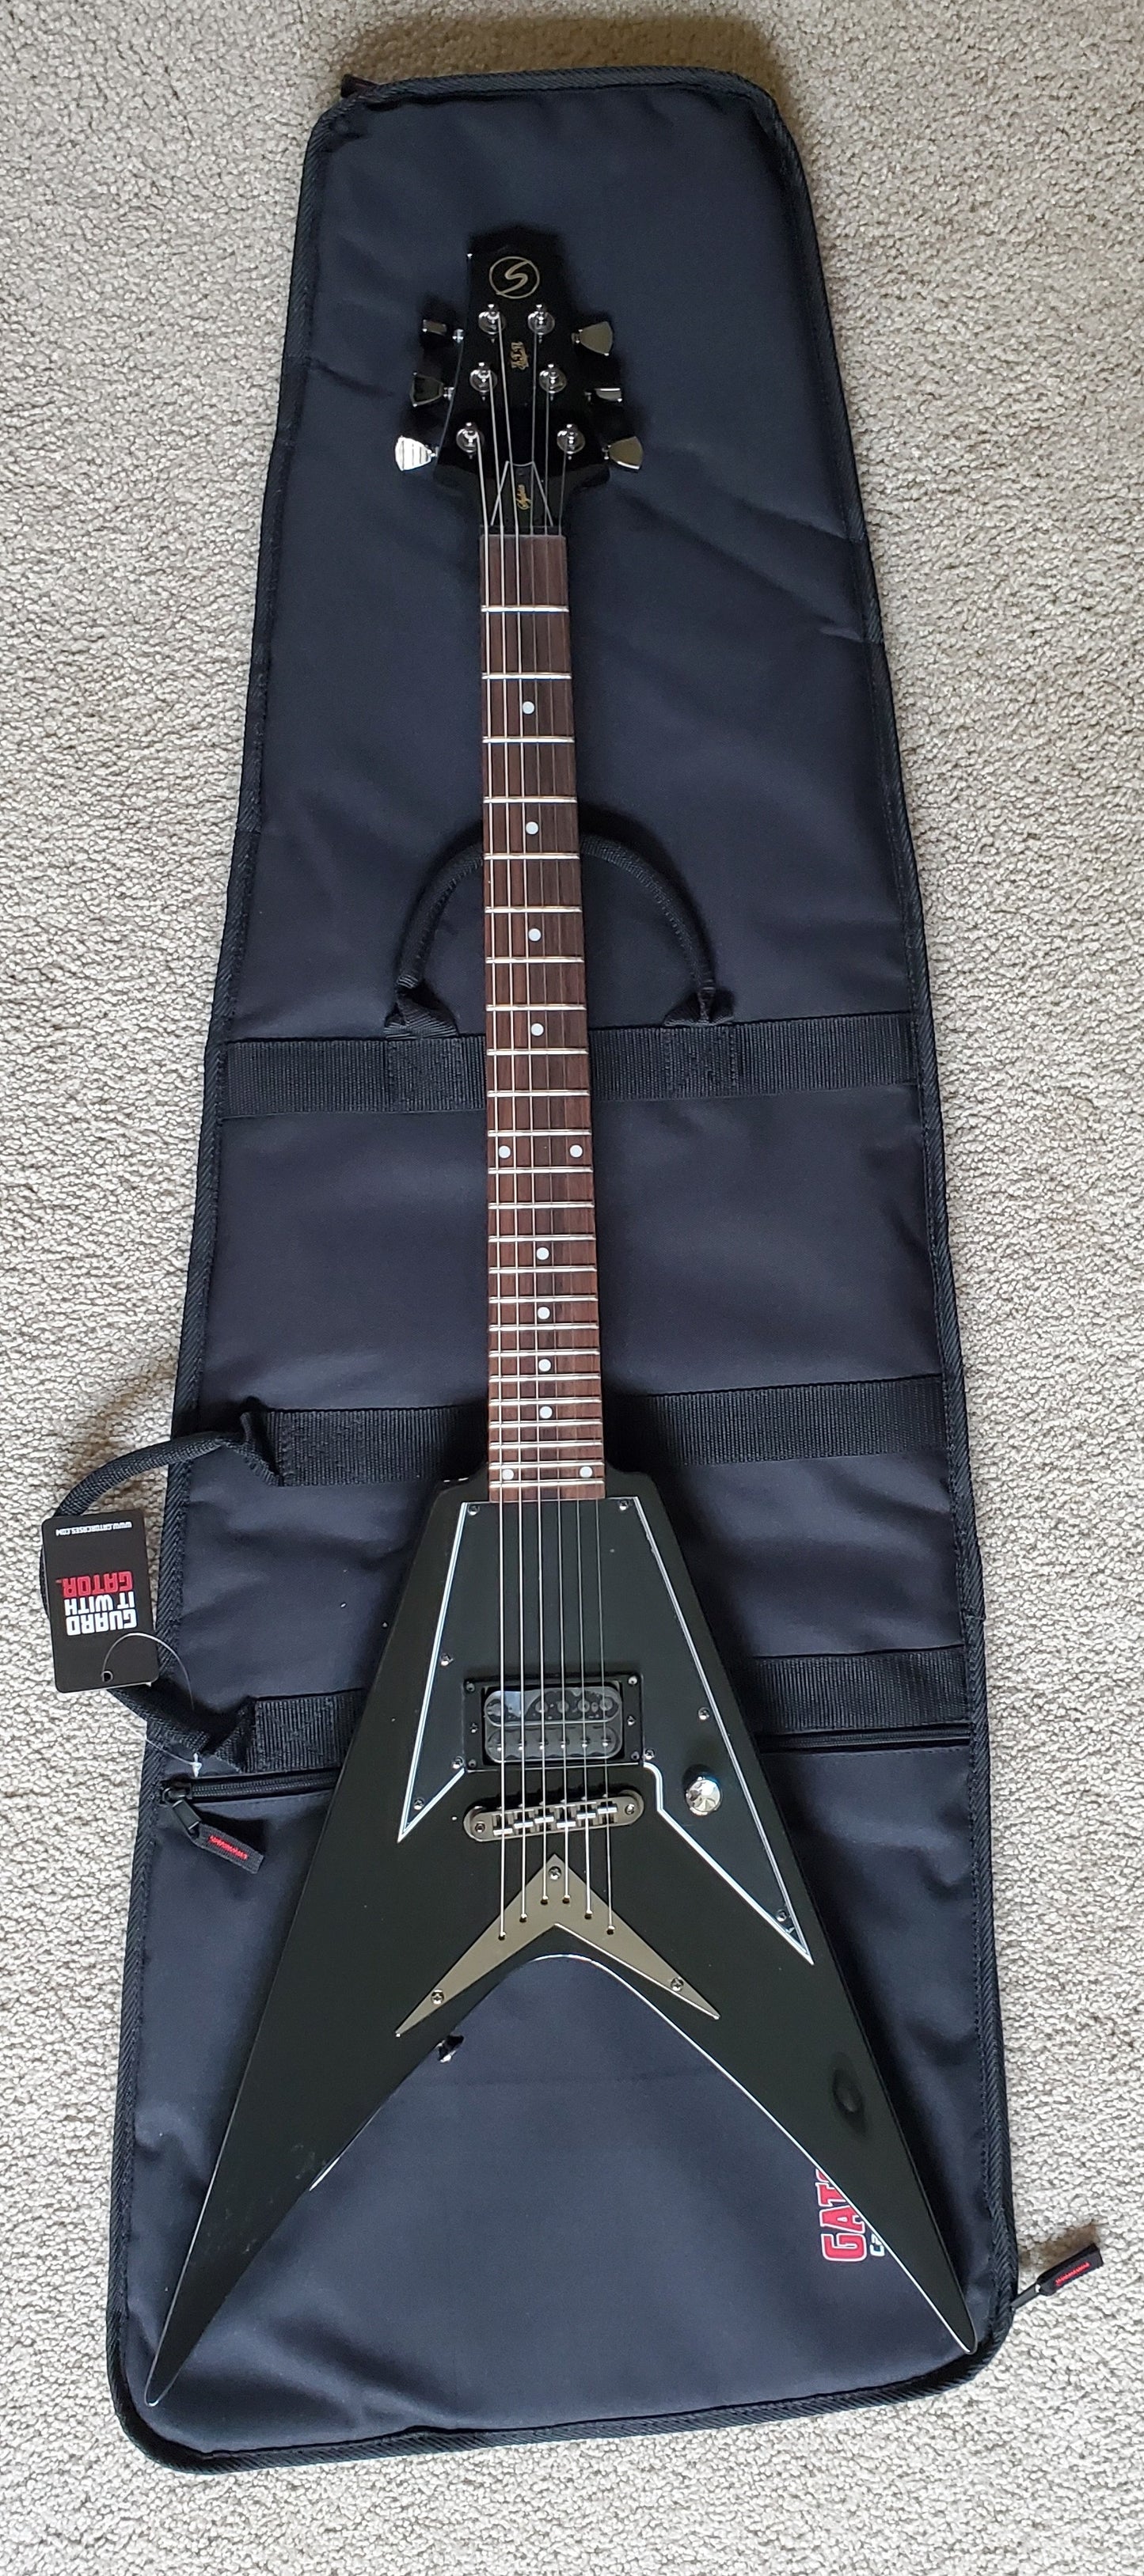 Samick SV10 Flying V Style Electric Guitar, Black Finish, New Gator Extreme Gig Bag